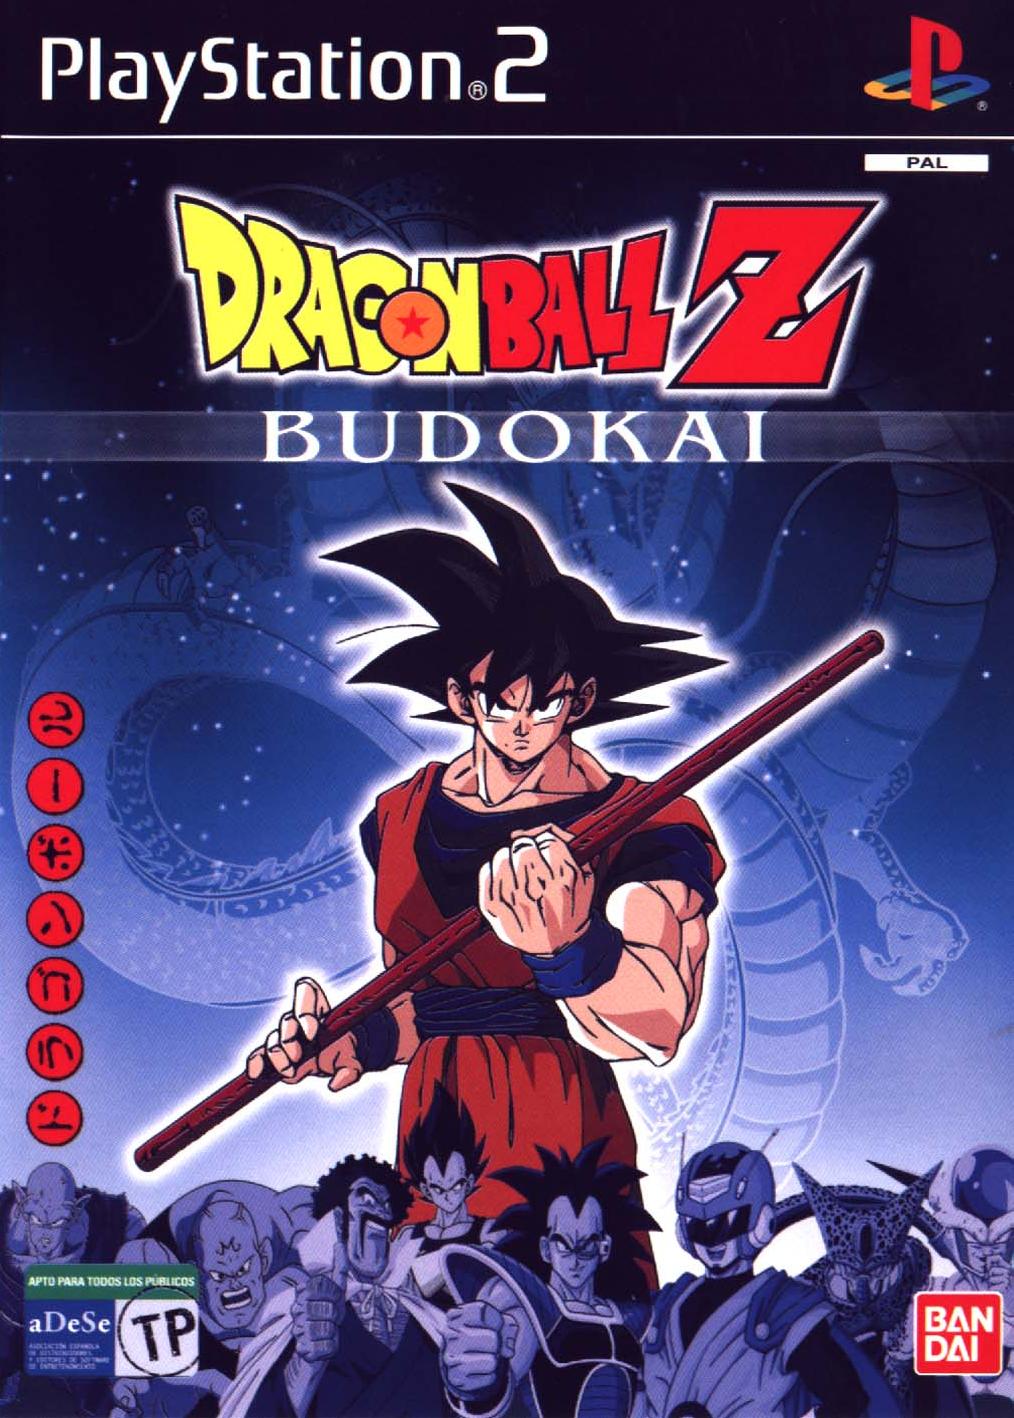 Dragon Ball Z: Budokai series